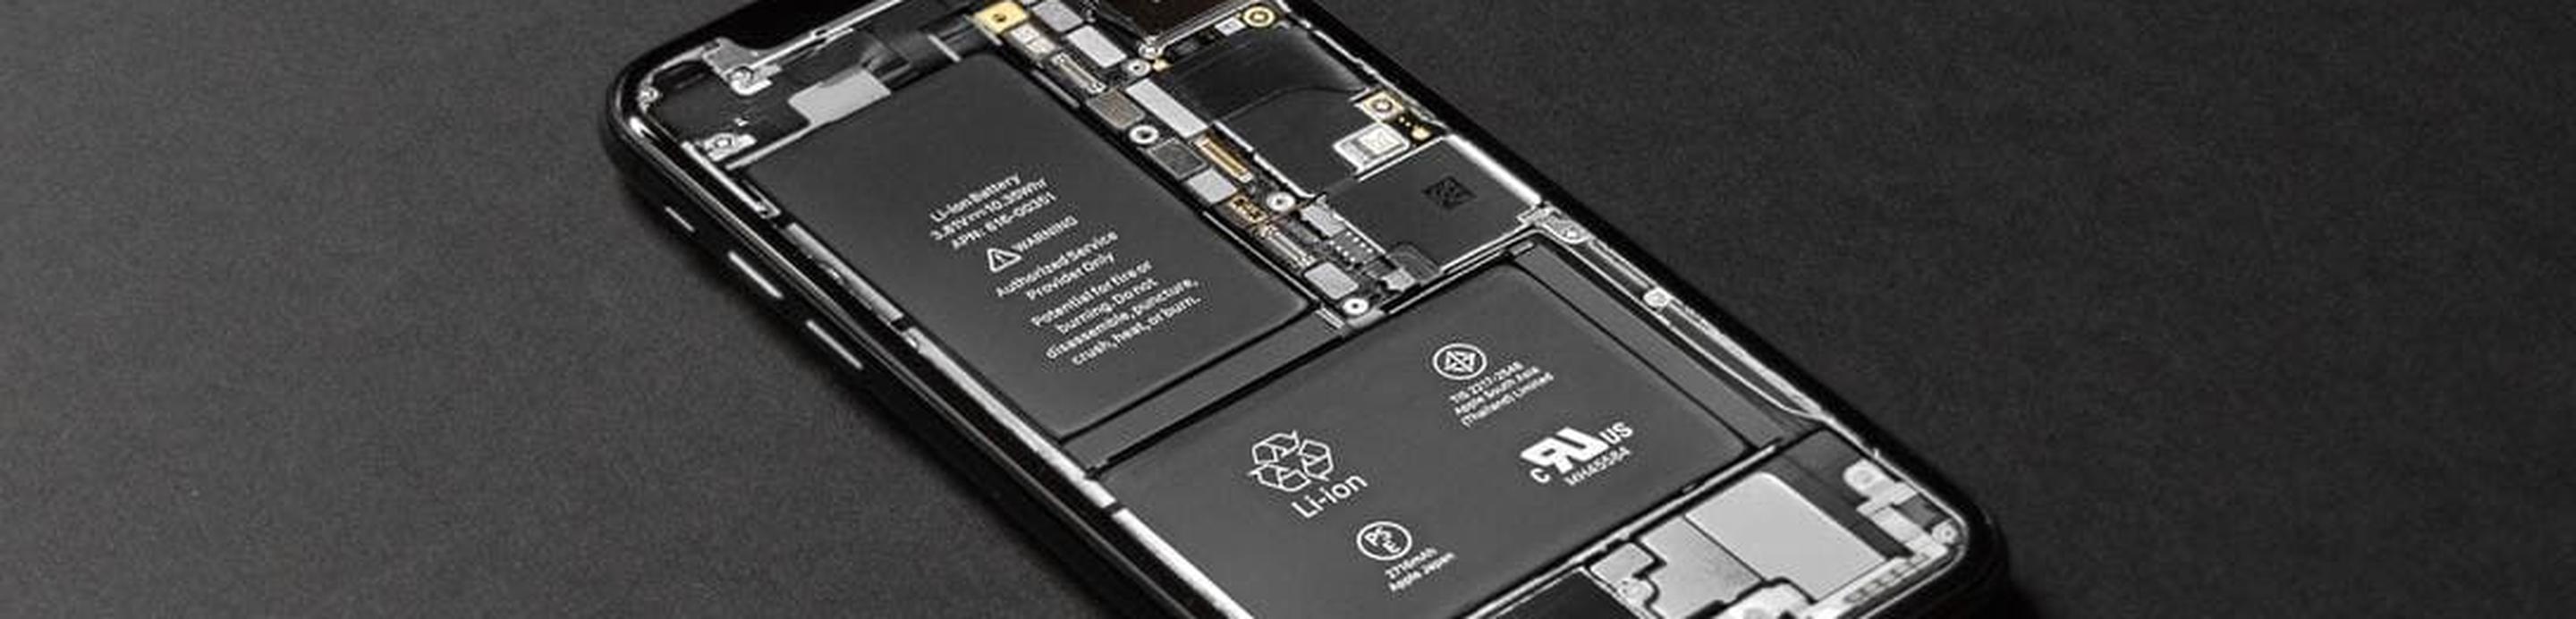 Refurbished smartphone battery